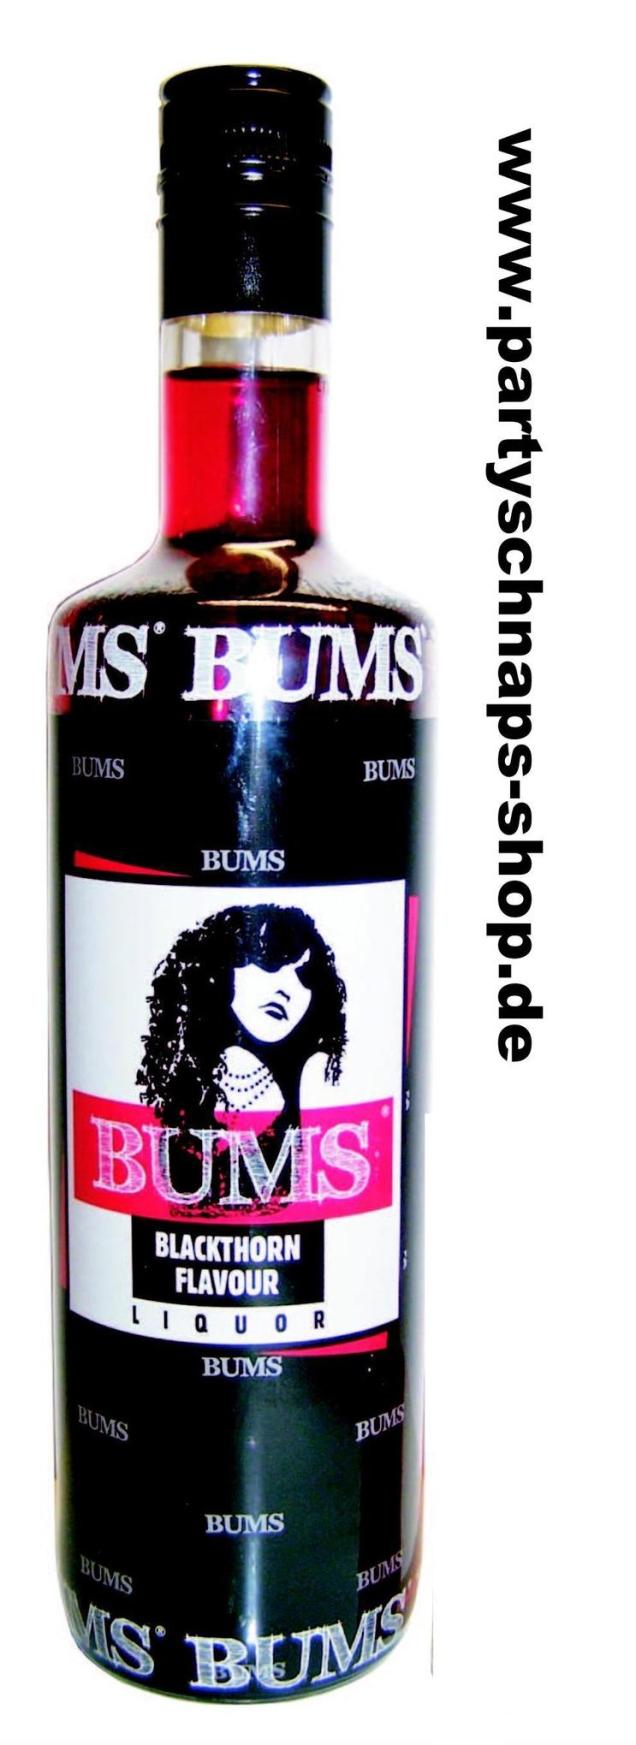 BUMS - Blackthorn Flavour Liquor